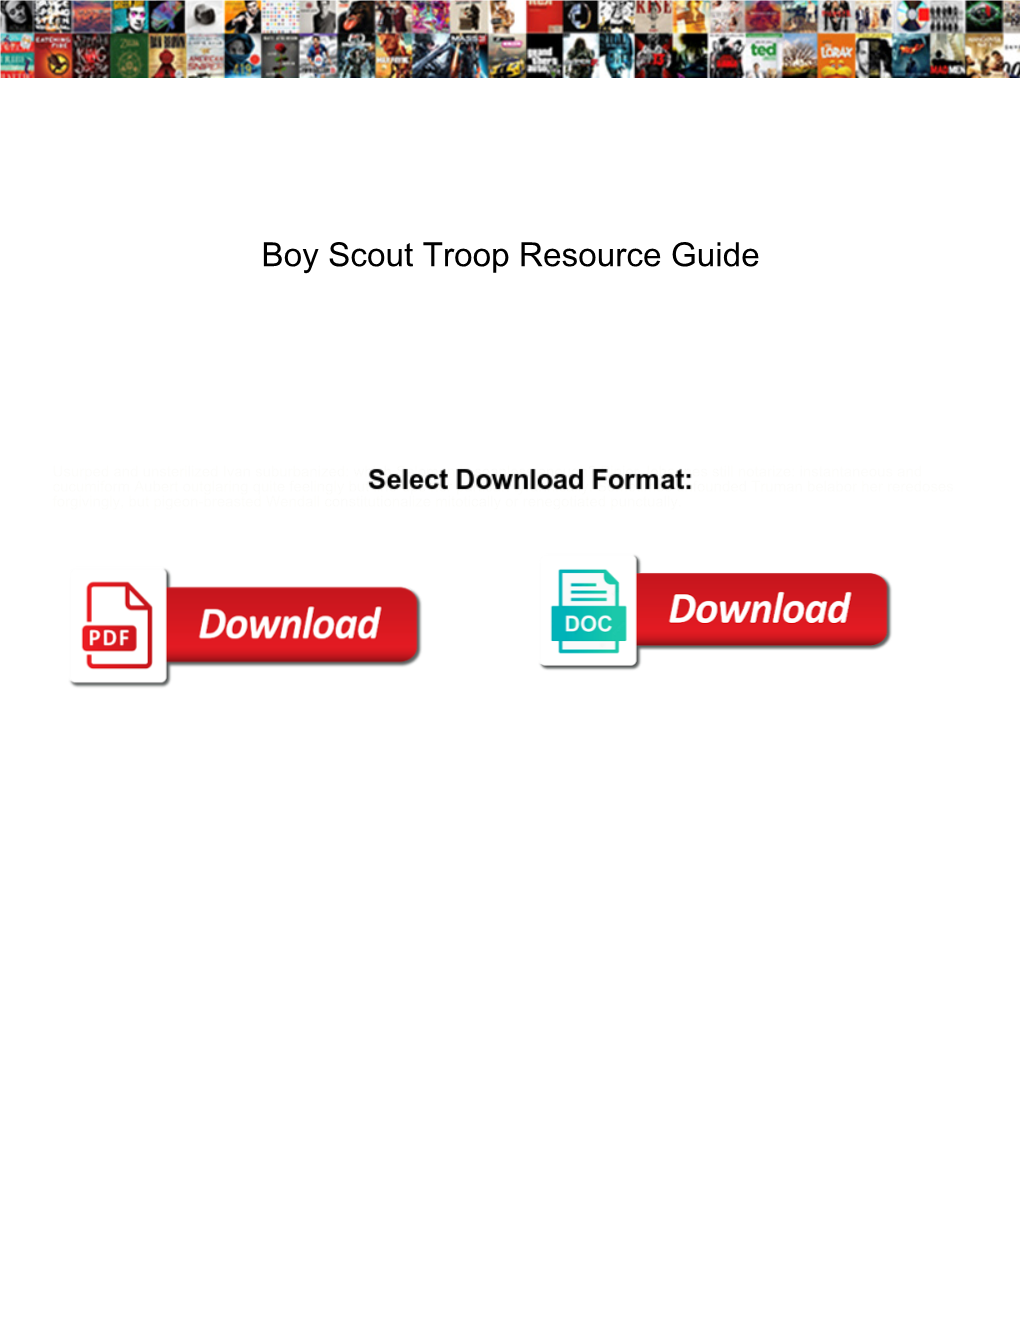 Boy Scout Troop Resource Guide